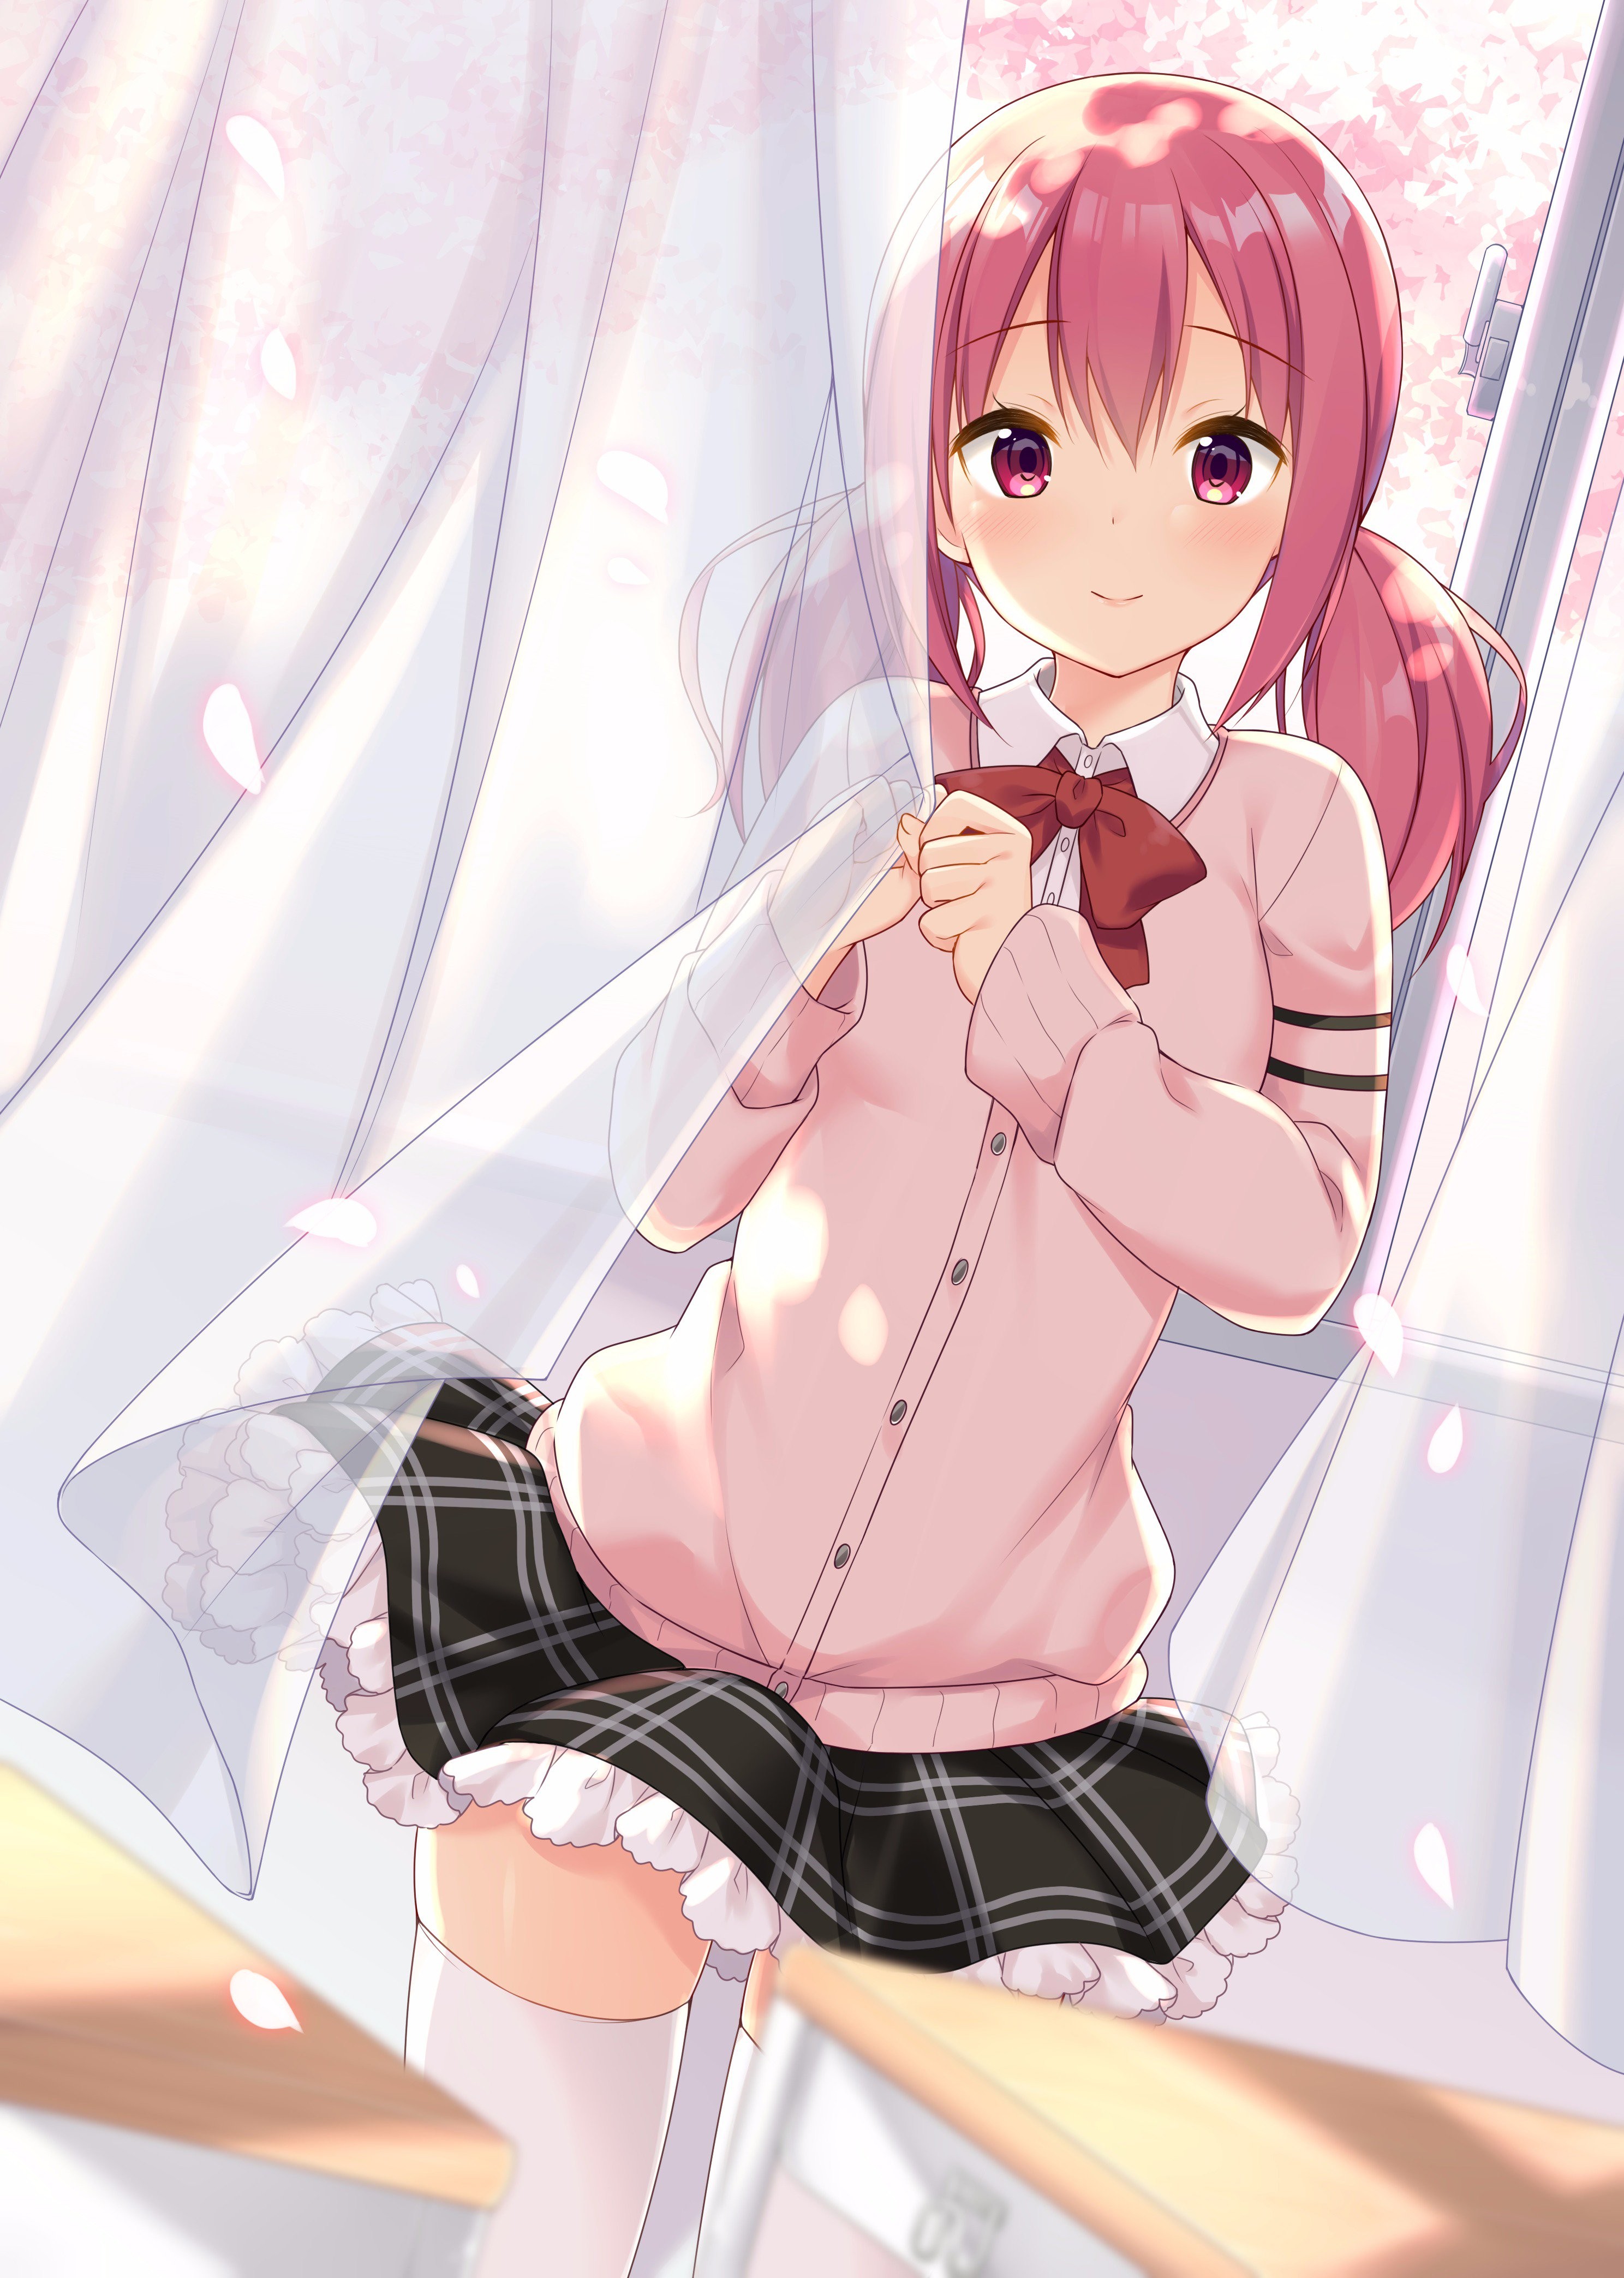 Anime 2976x4175 anime anime girls sweater long hair pink hair skirt smiling looking at viewer